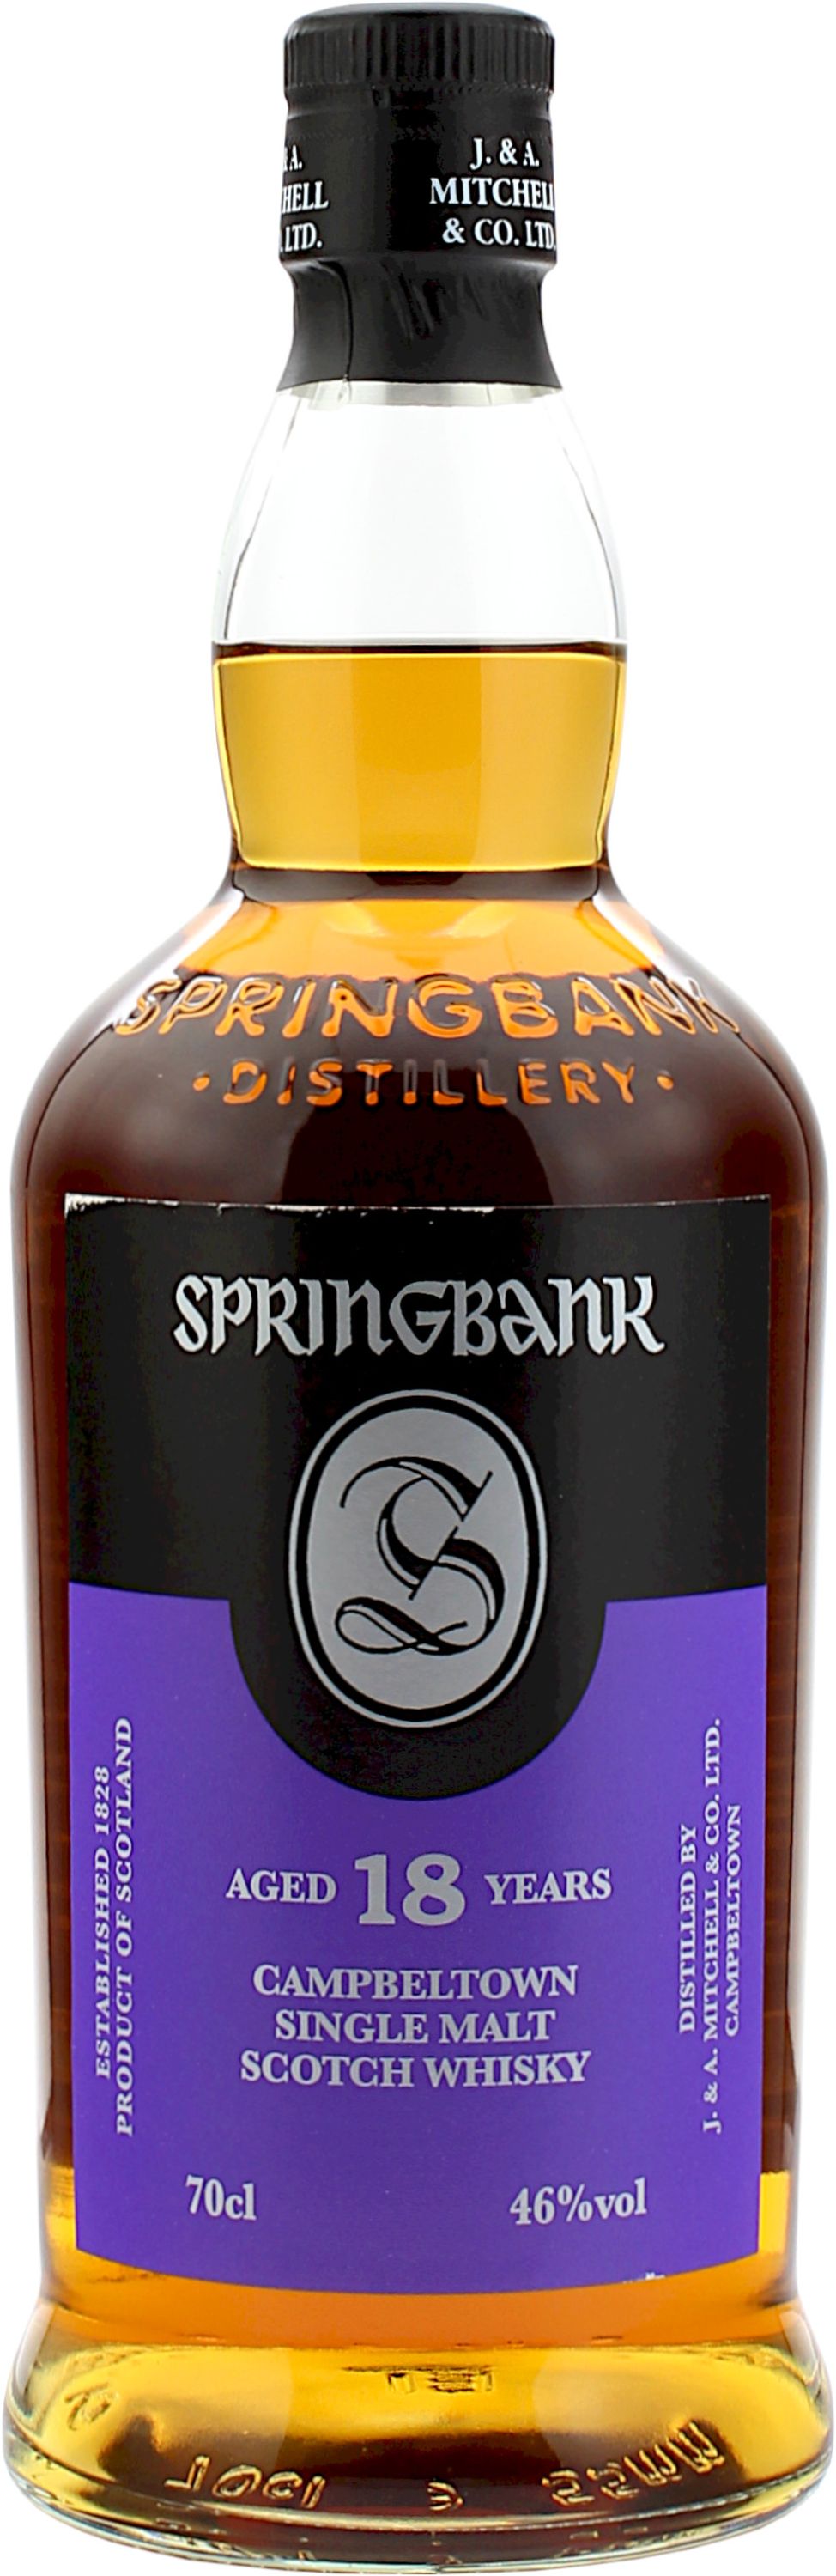 Springbank 18 Jahre Campbeltown Single Malt Scotch Whisky 0,7l, alc. 46 Vol.-%